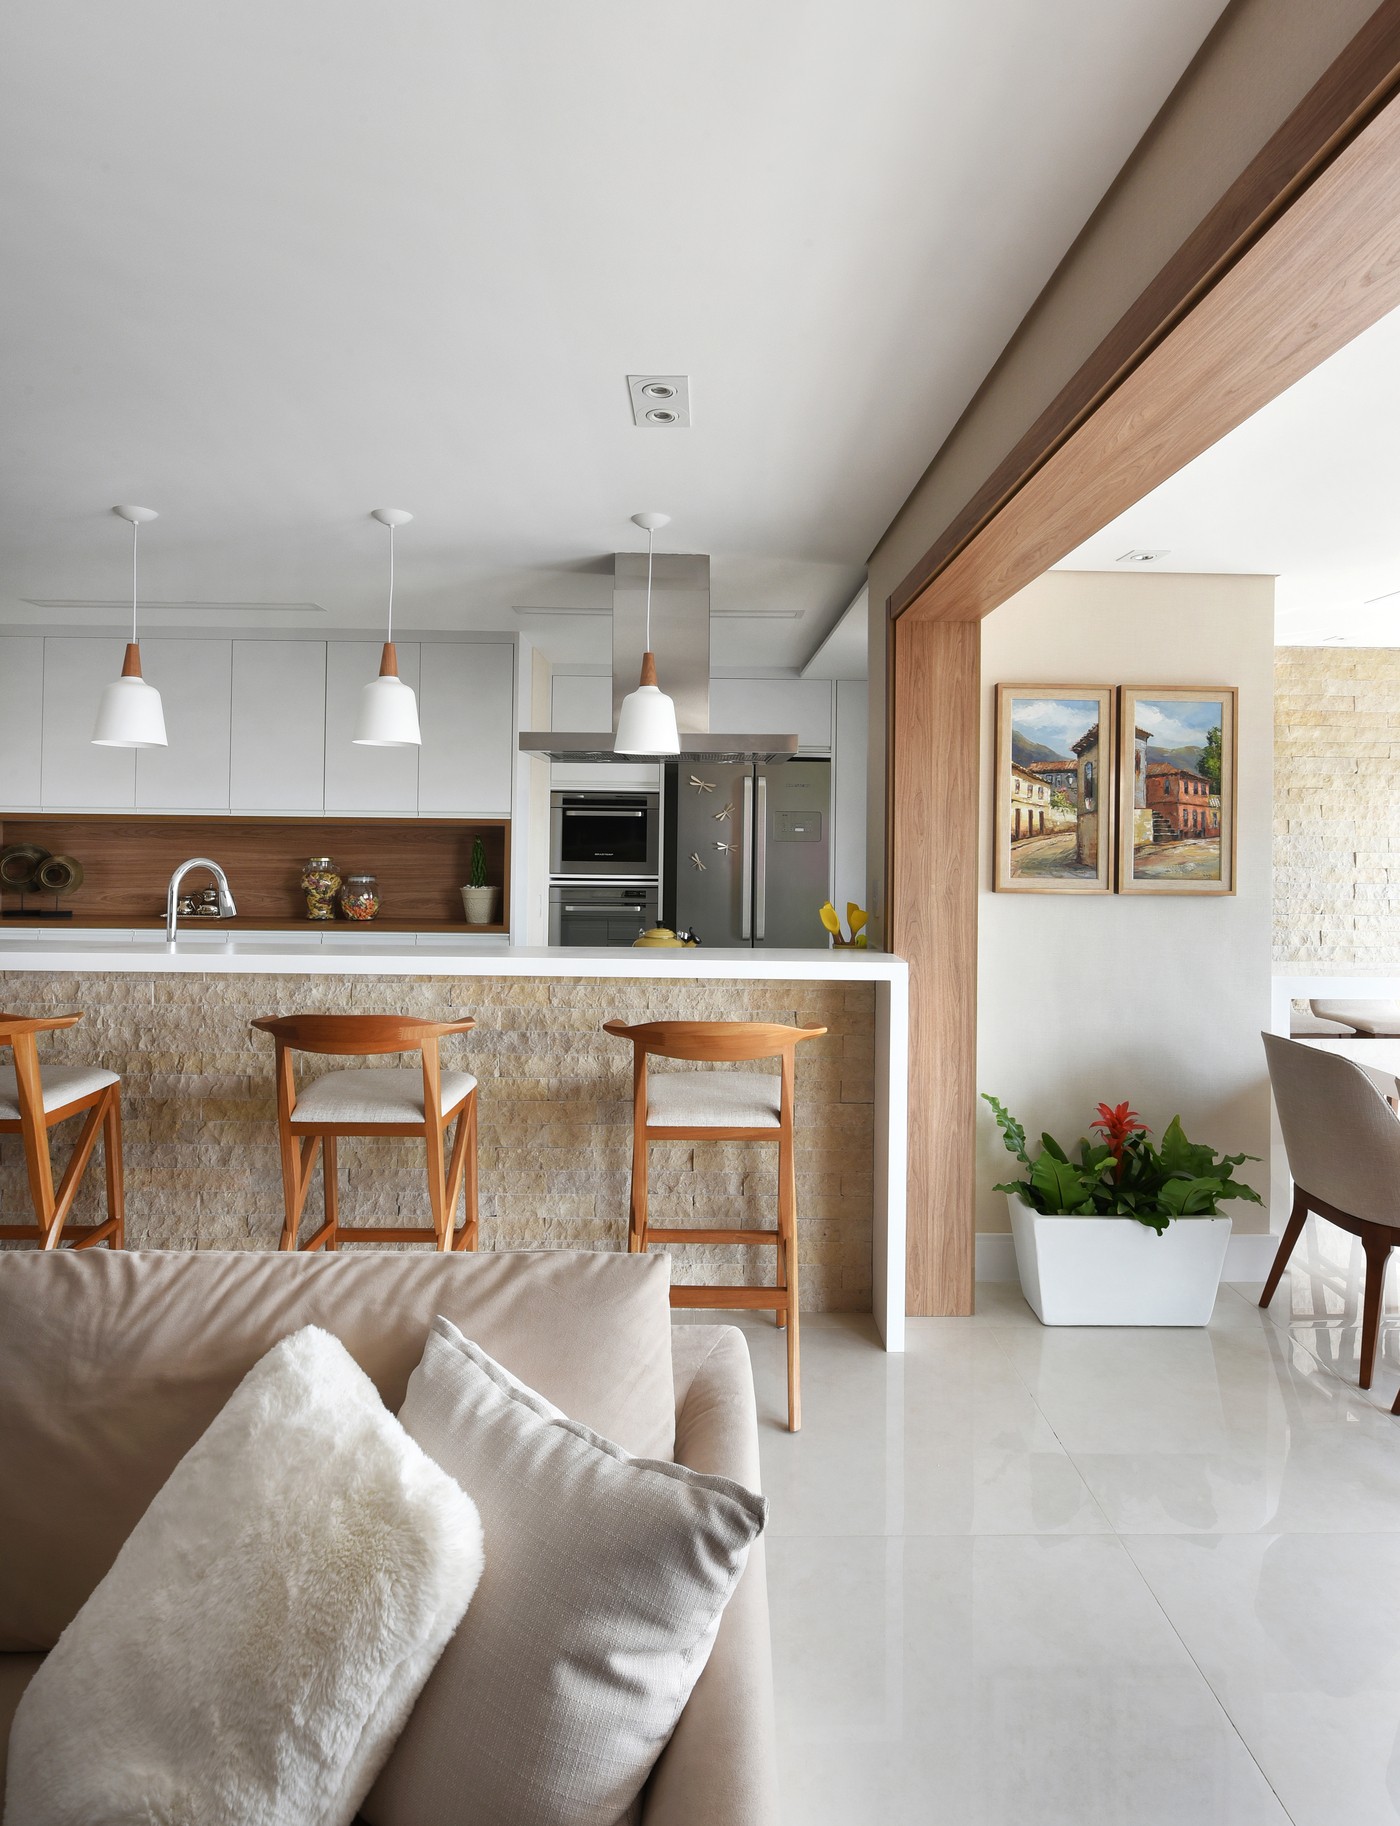 Décor do dia: cozinha aberta tem estilo minimalista e tons claros (Foto: Sidney Doll)